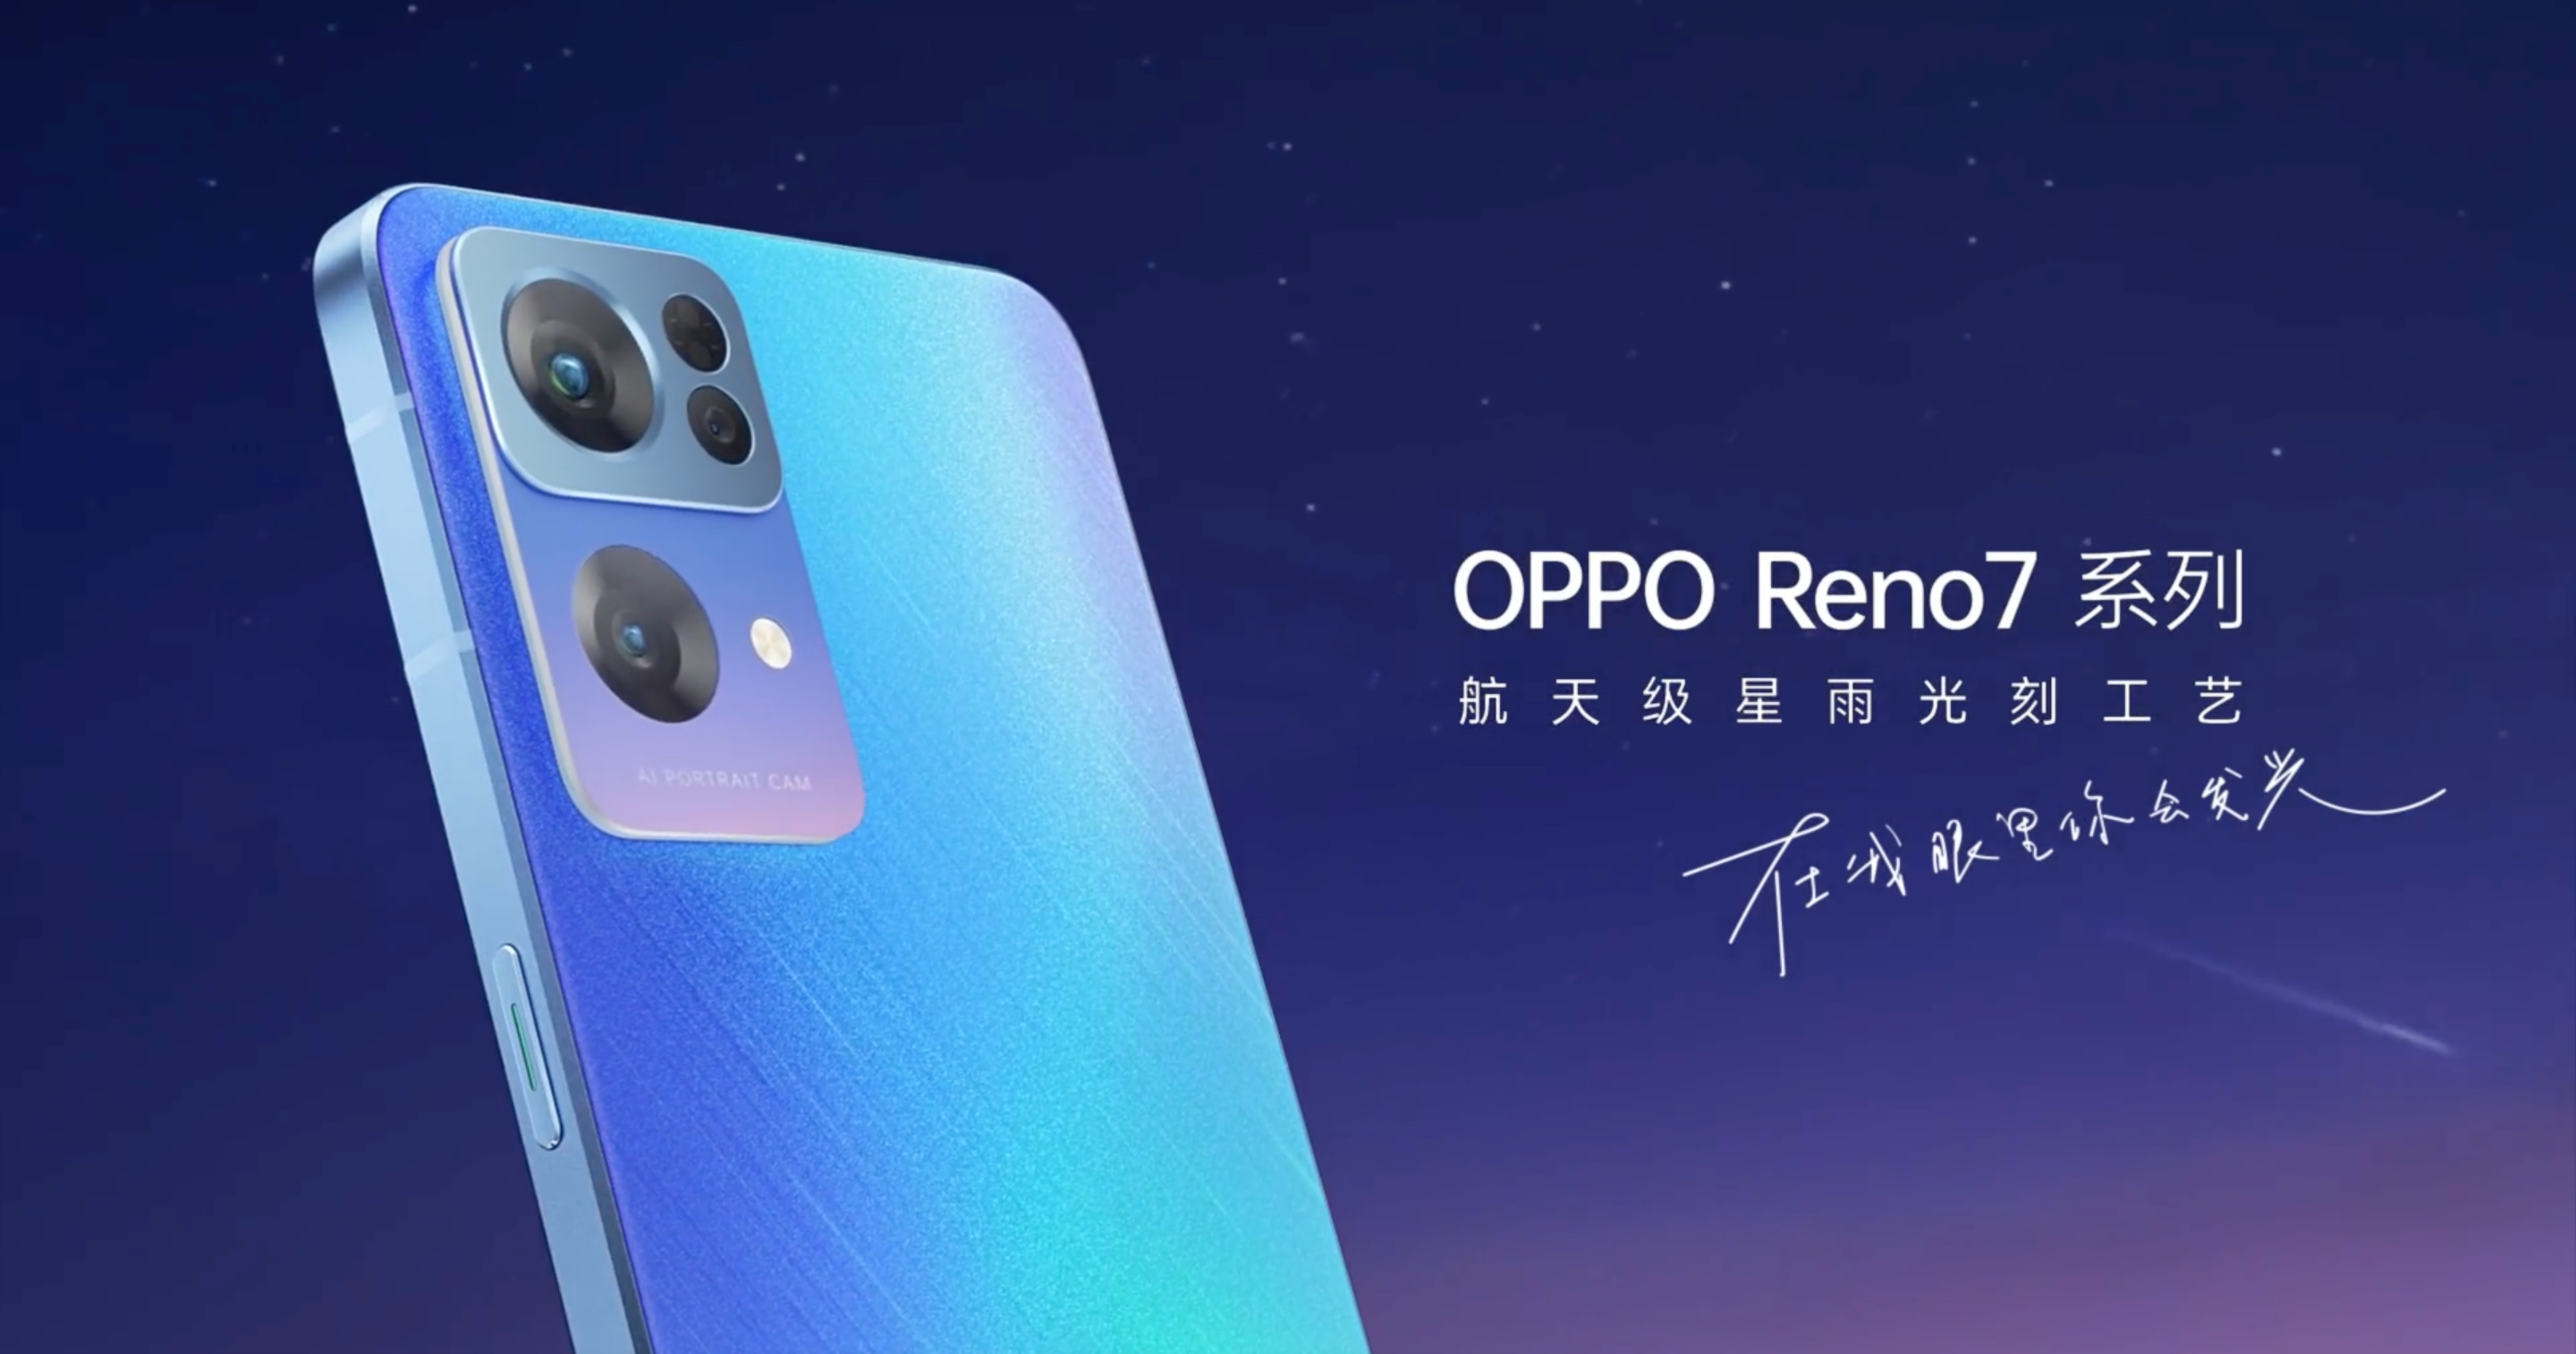 Official: OPPO Reno 7, OPPO Reno 7 Pro and OPPO Reno 7 SE will debut on November 25